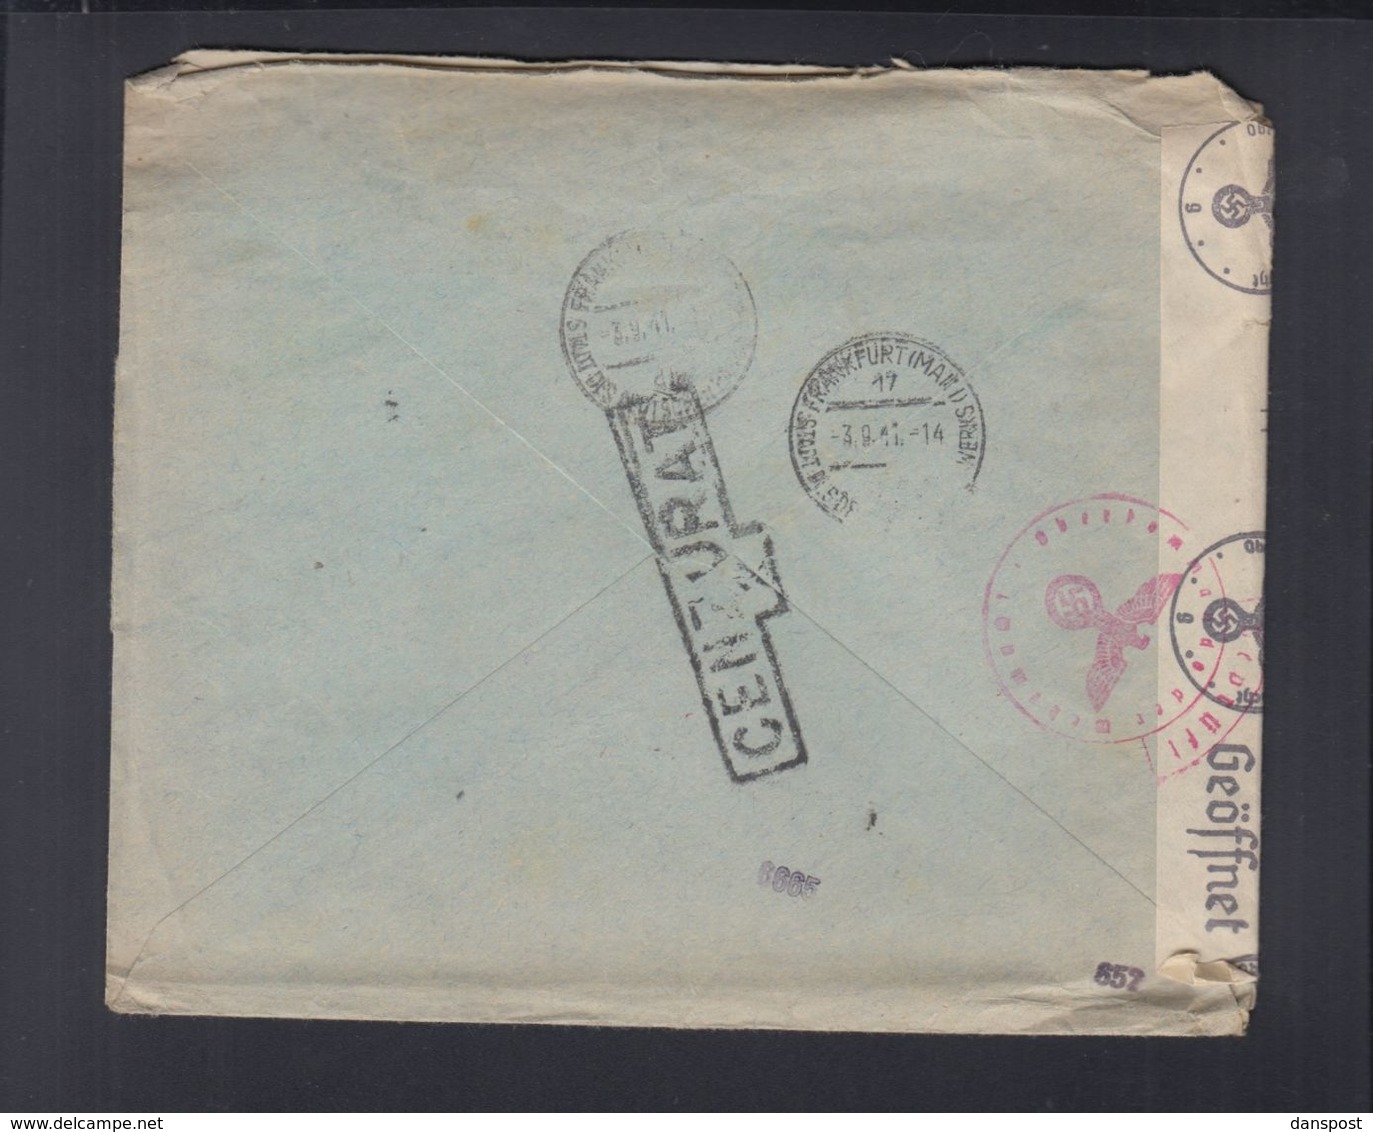 Rumänien Romania Luftpost R-Brief 1941 Brasov Nach Frankfurt Zensur - Storia Postale Seconda Guerra Mondiale